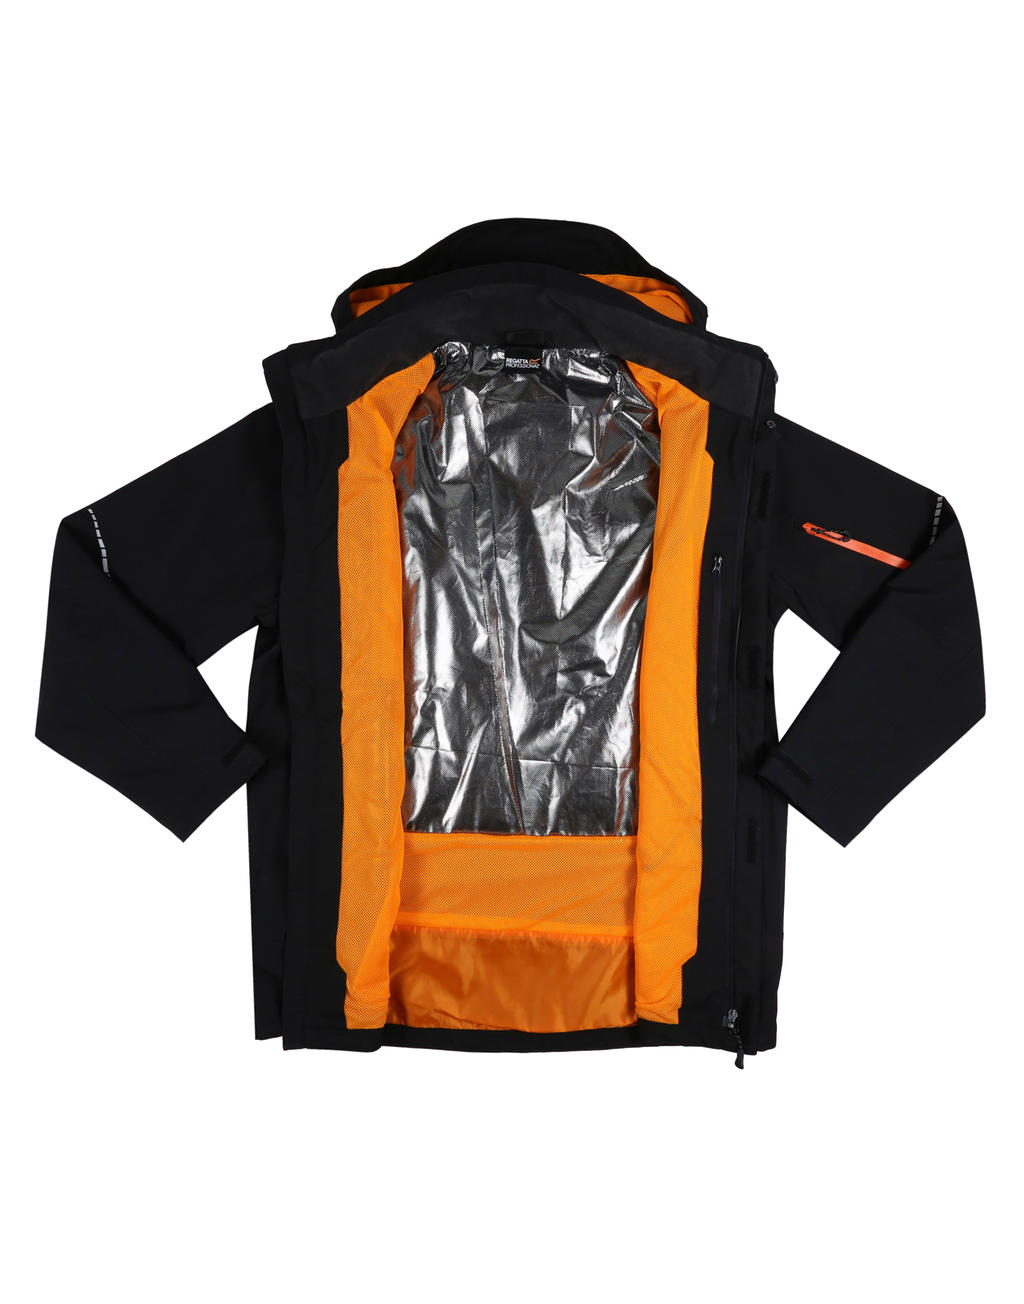  X-Pro Exosphere II Shell Jacket in Farbe Black/Magma